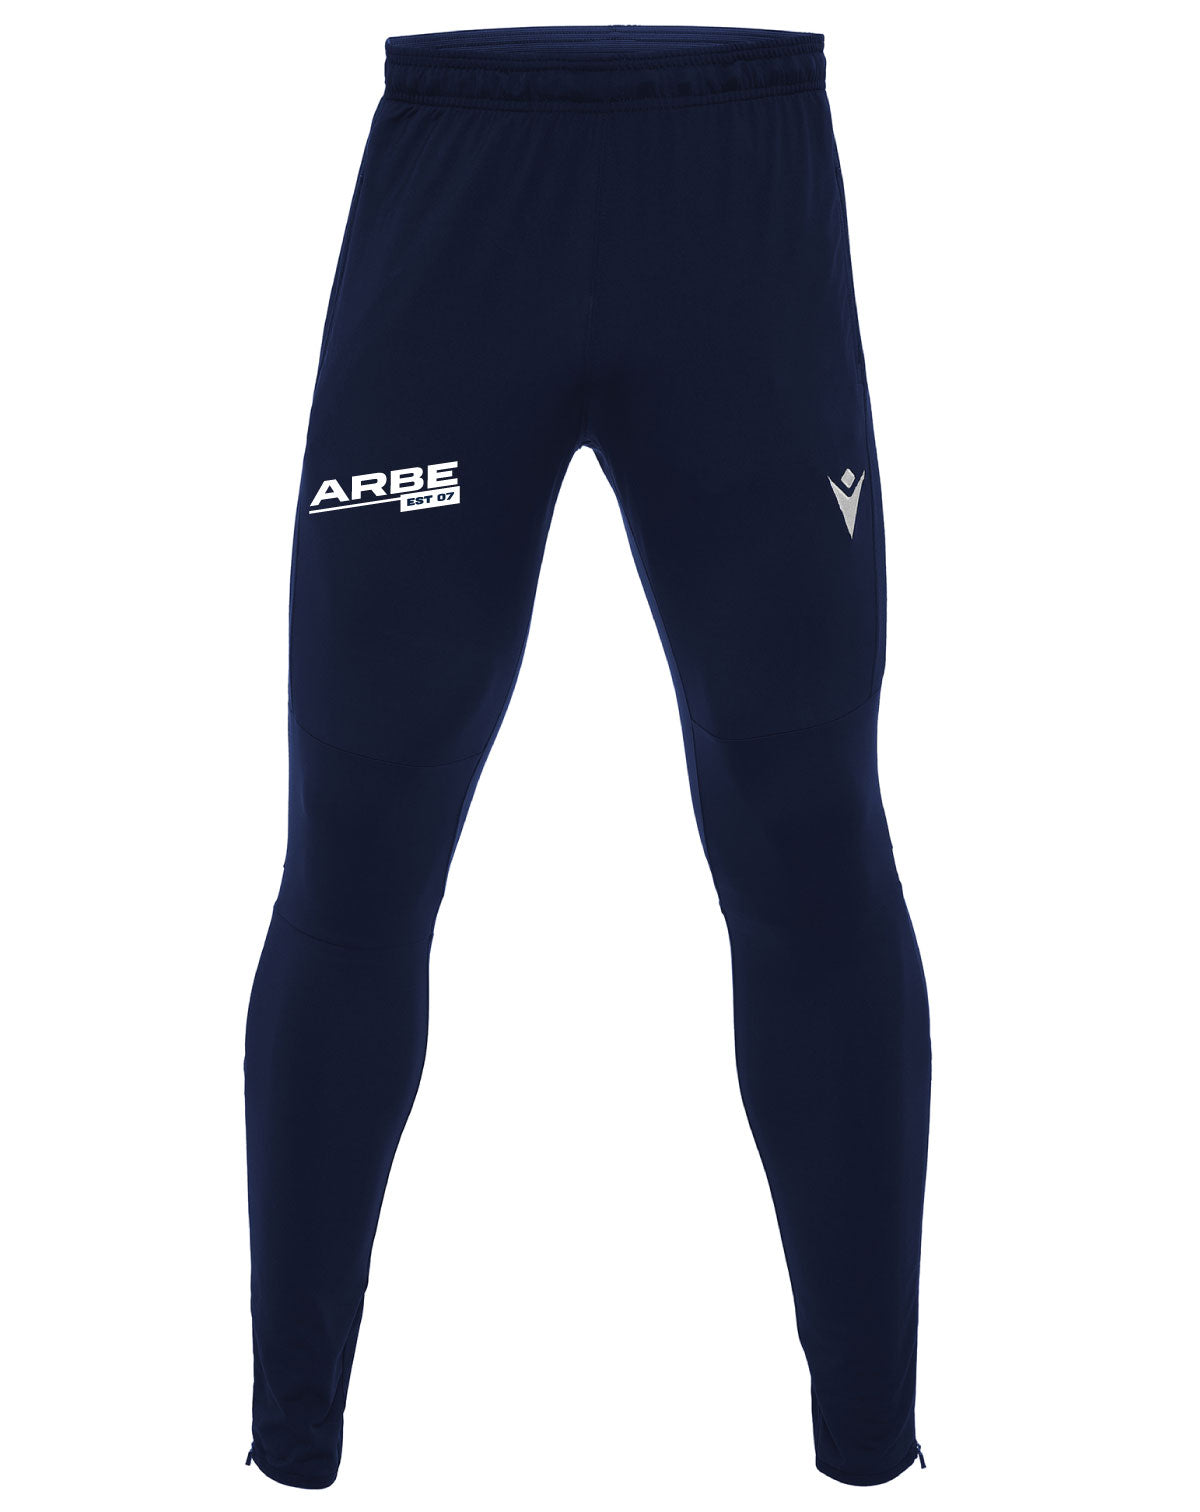 ARBE Training Pants - Thames